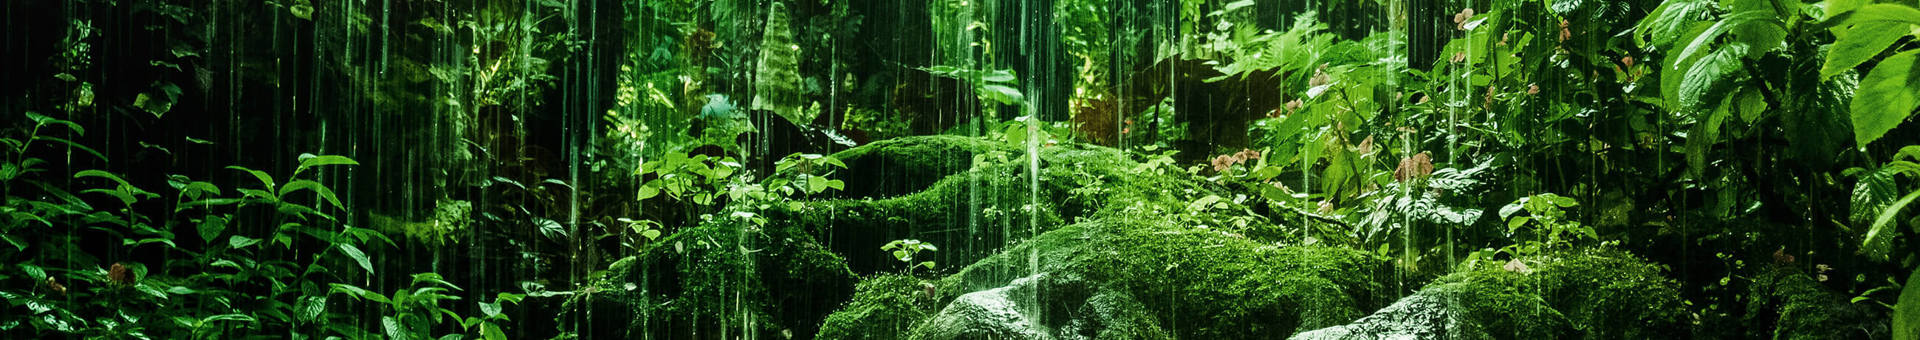 rain-forest_tp.jpg